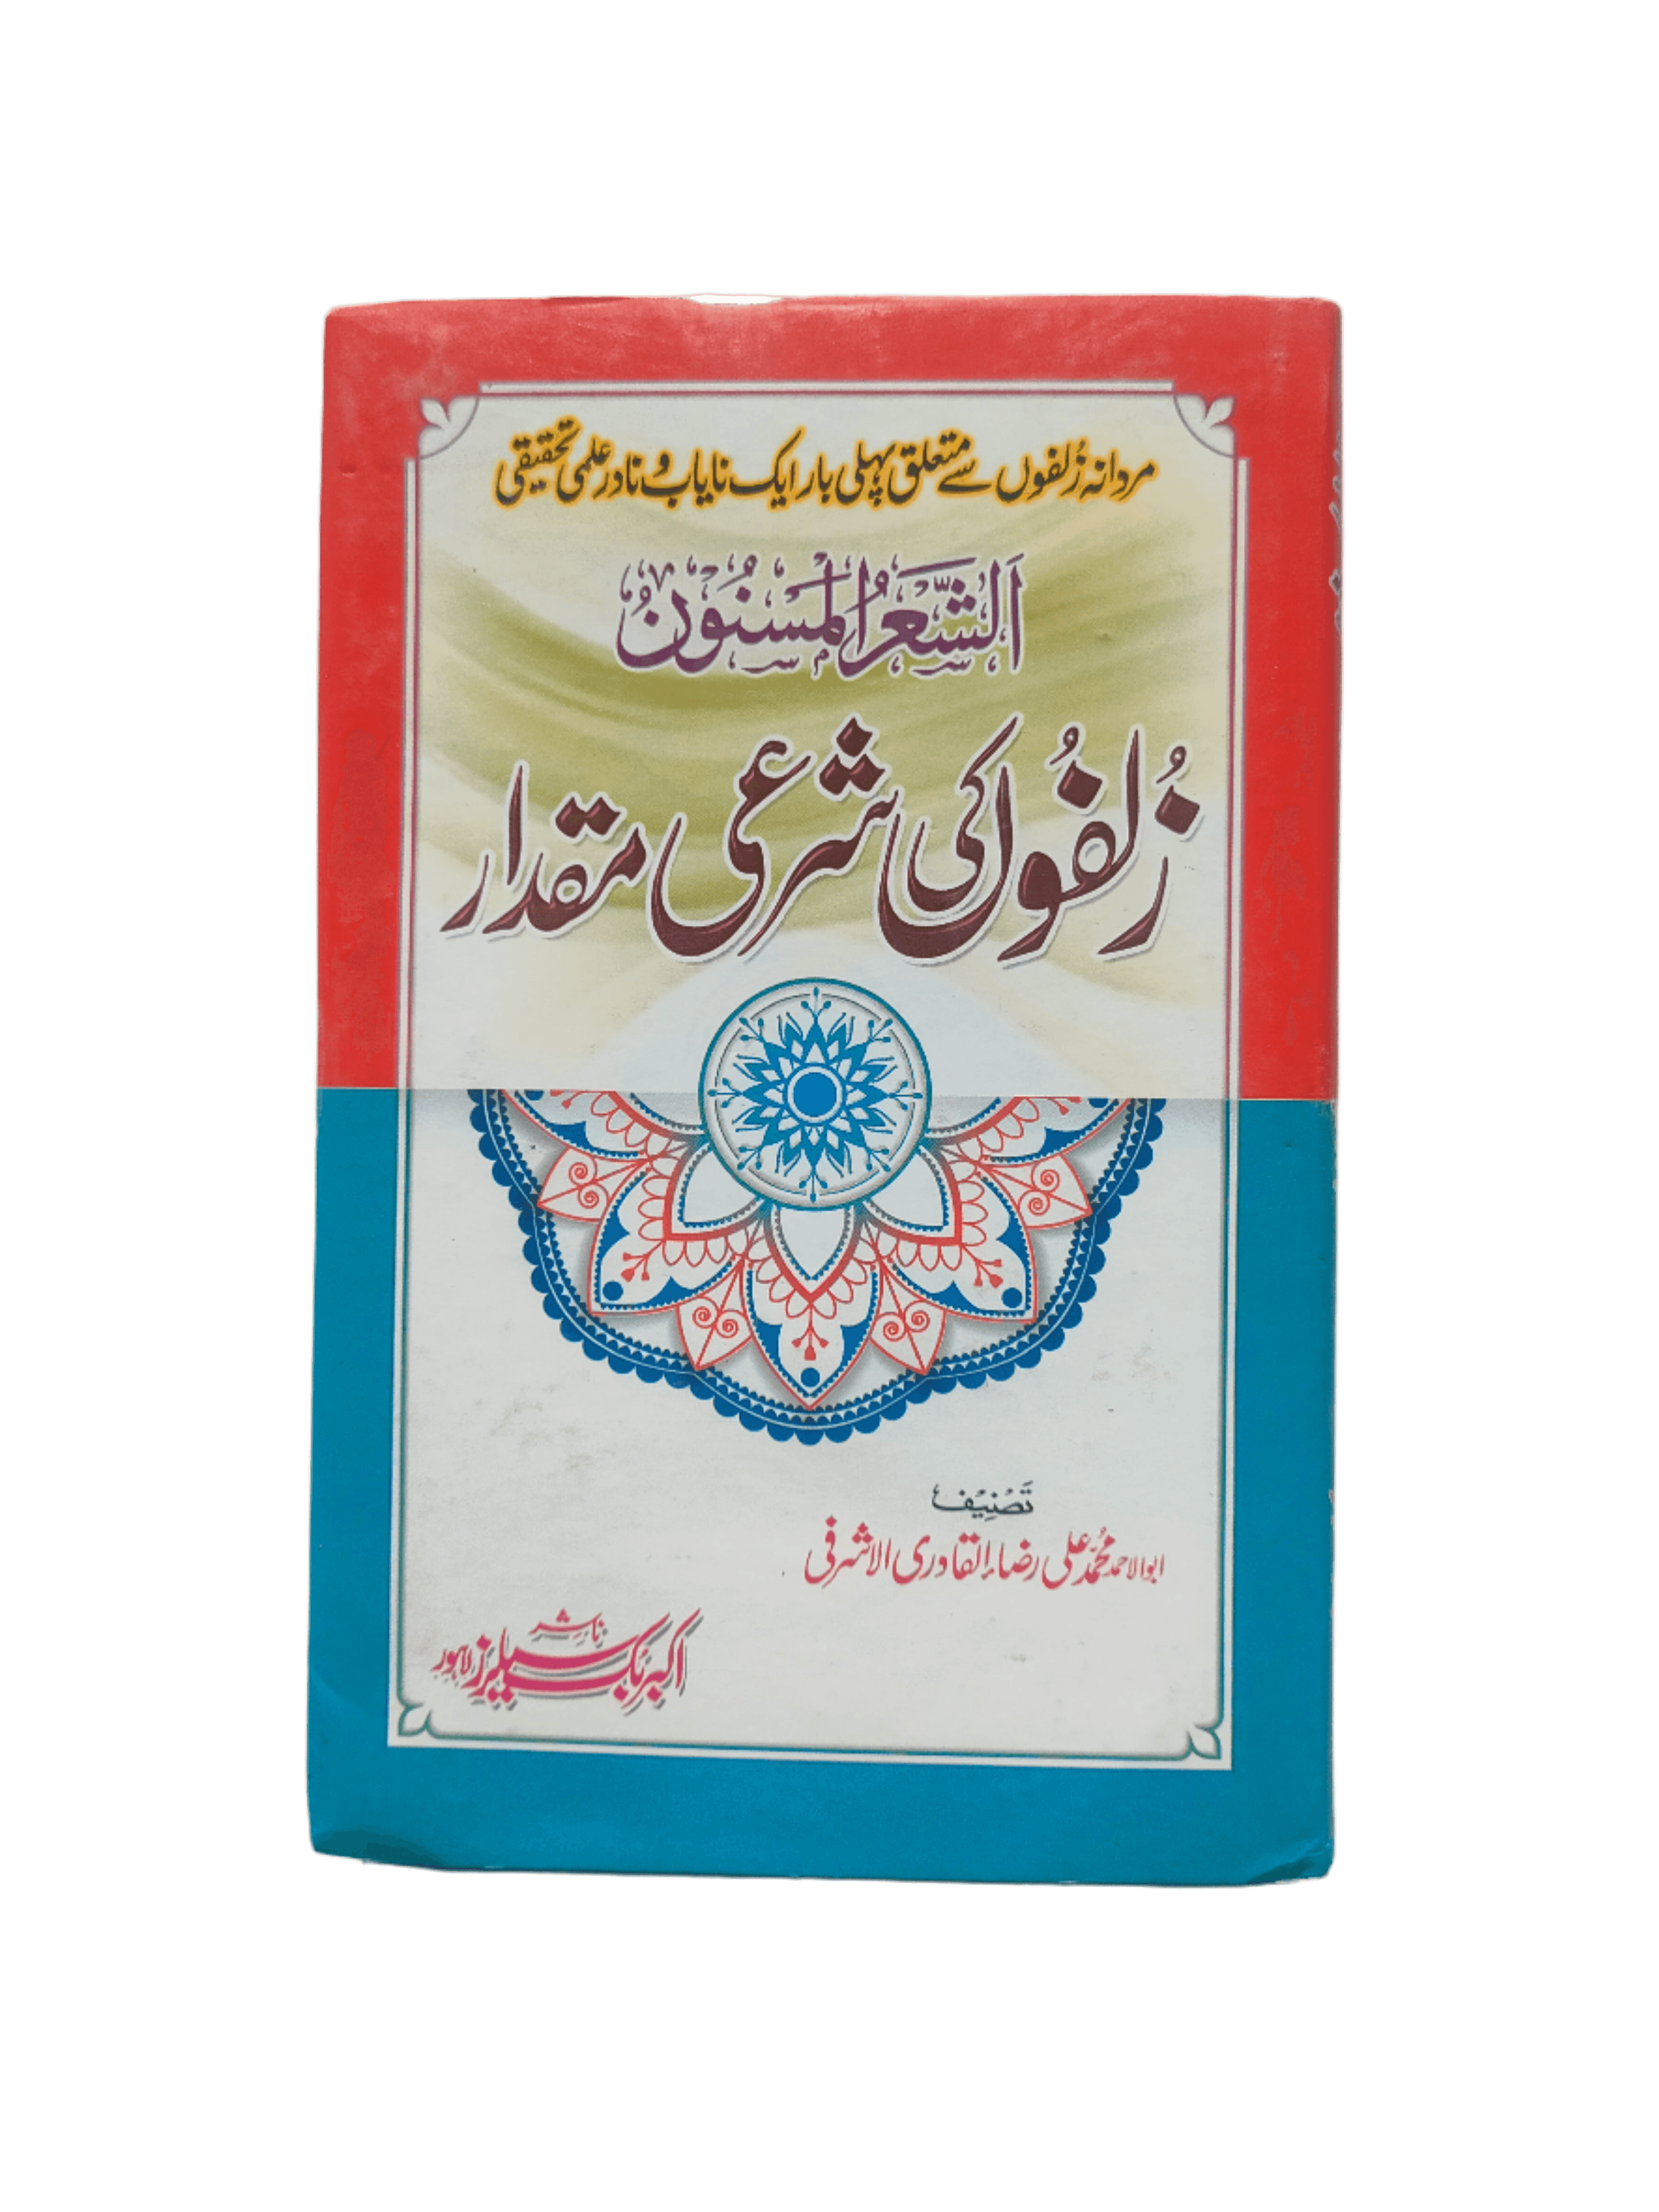 Zulfon Ki Sharai Miqdar (The Religious Length of Hair) - KHAJISTAN™